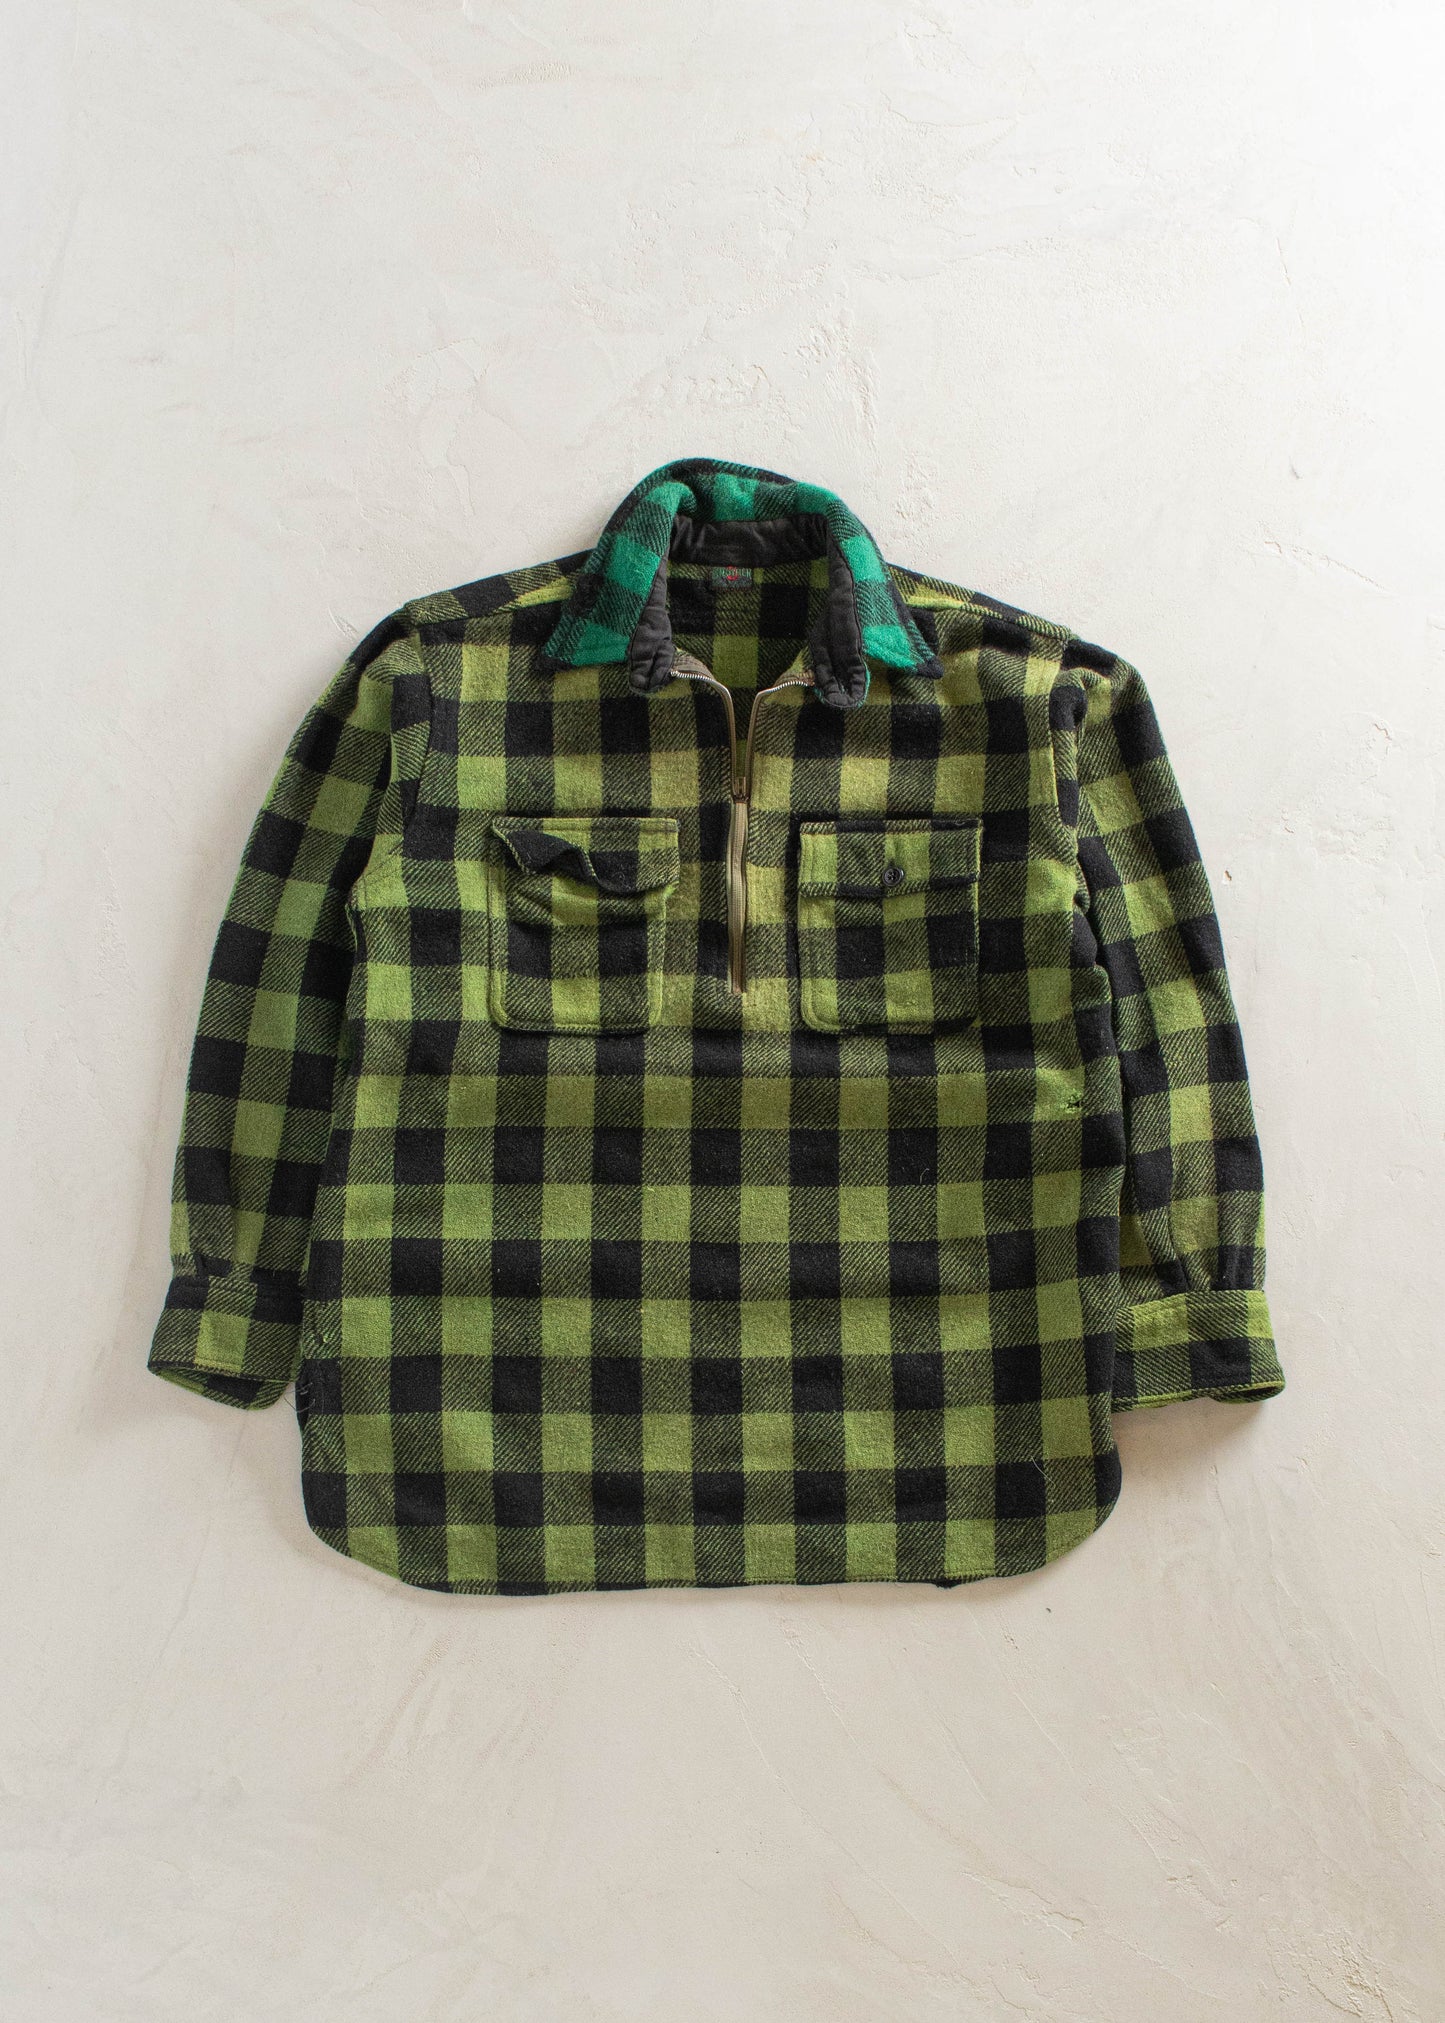 Vintage 1940s 5 Brothers Half Zip Flannel Shirt Size M/L